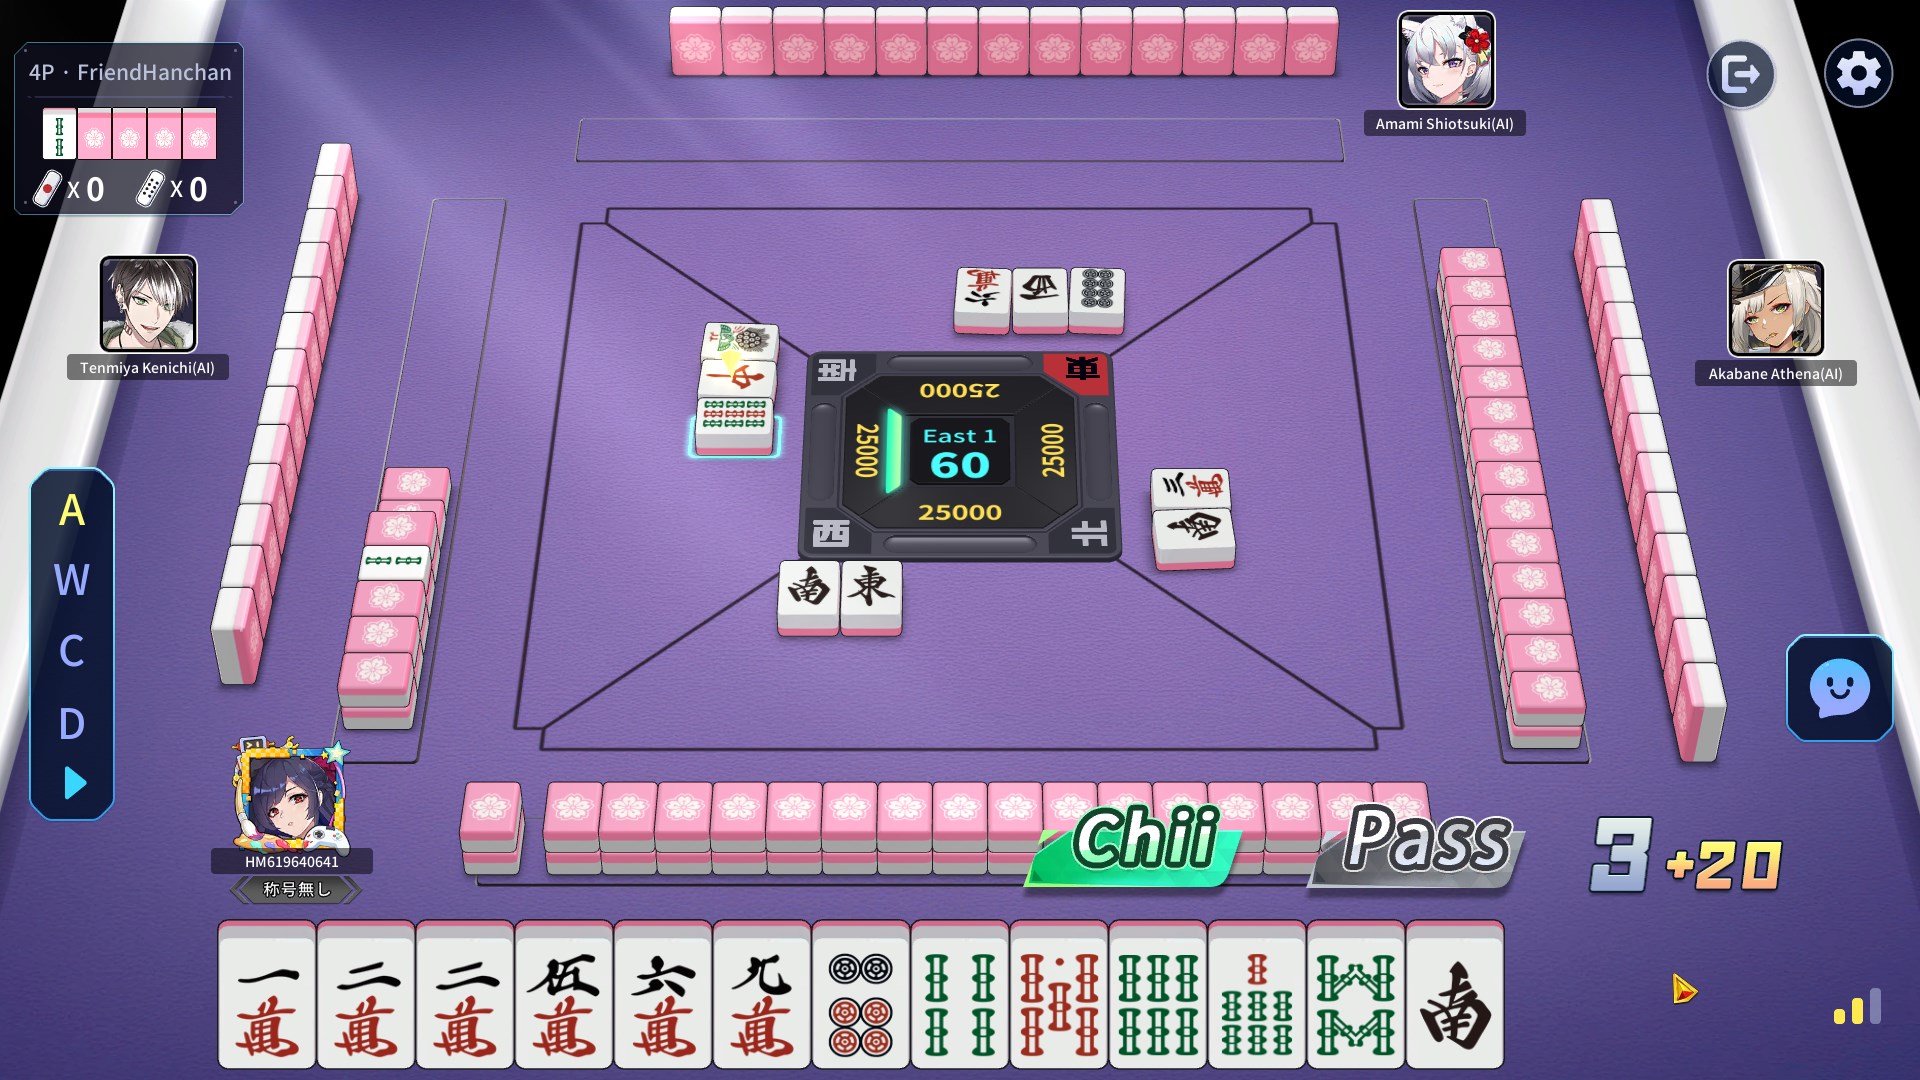 What's On Steam - Riichi City - Japanese Mahjong Online